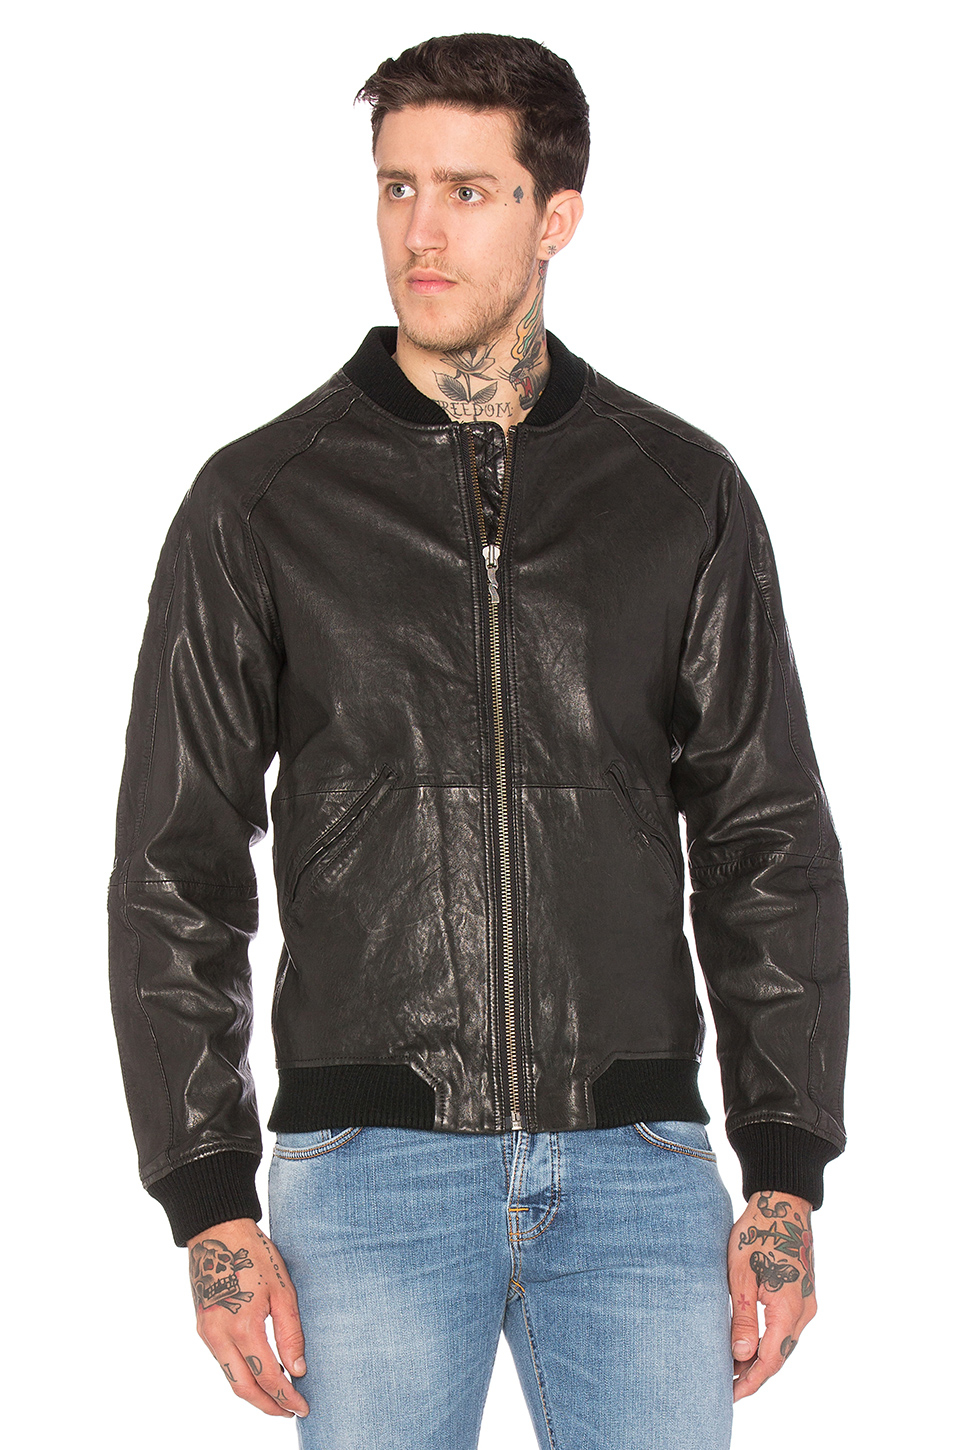 Nudie Jeans Brook Leather Jacket in Black for Men - Lyst